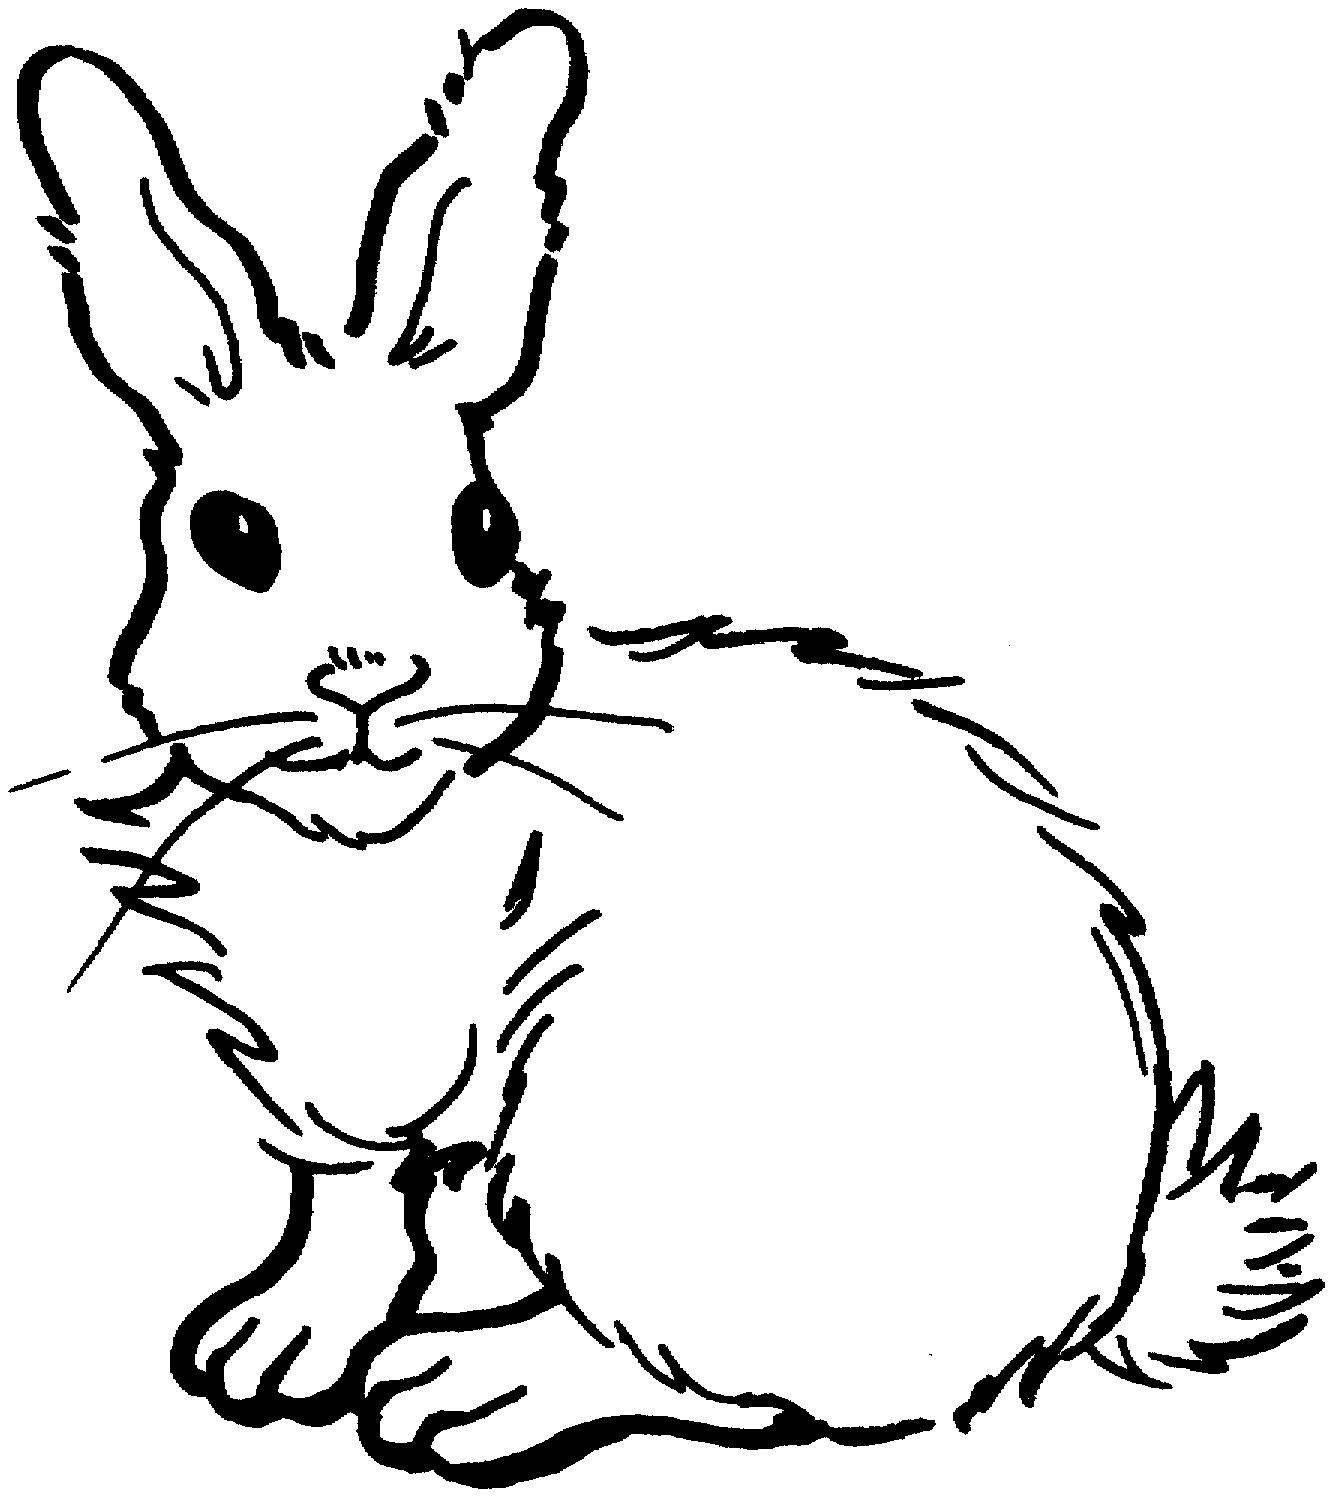 Rabbit Image